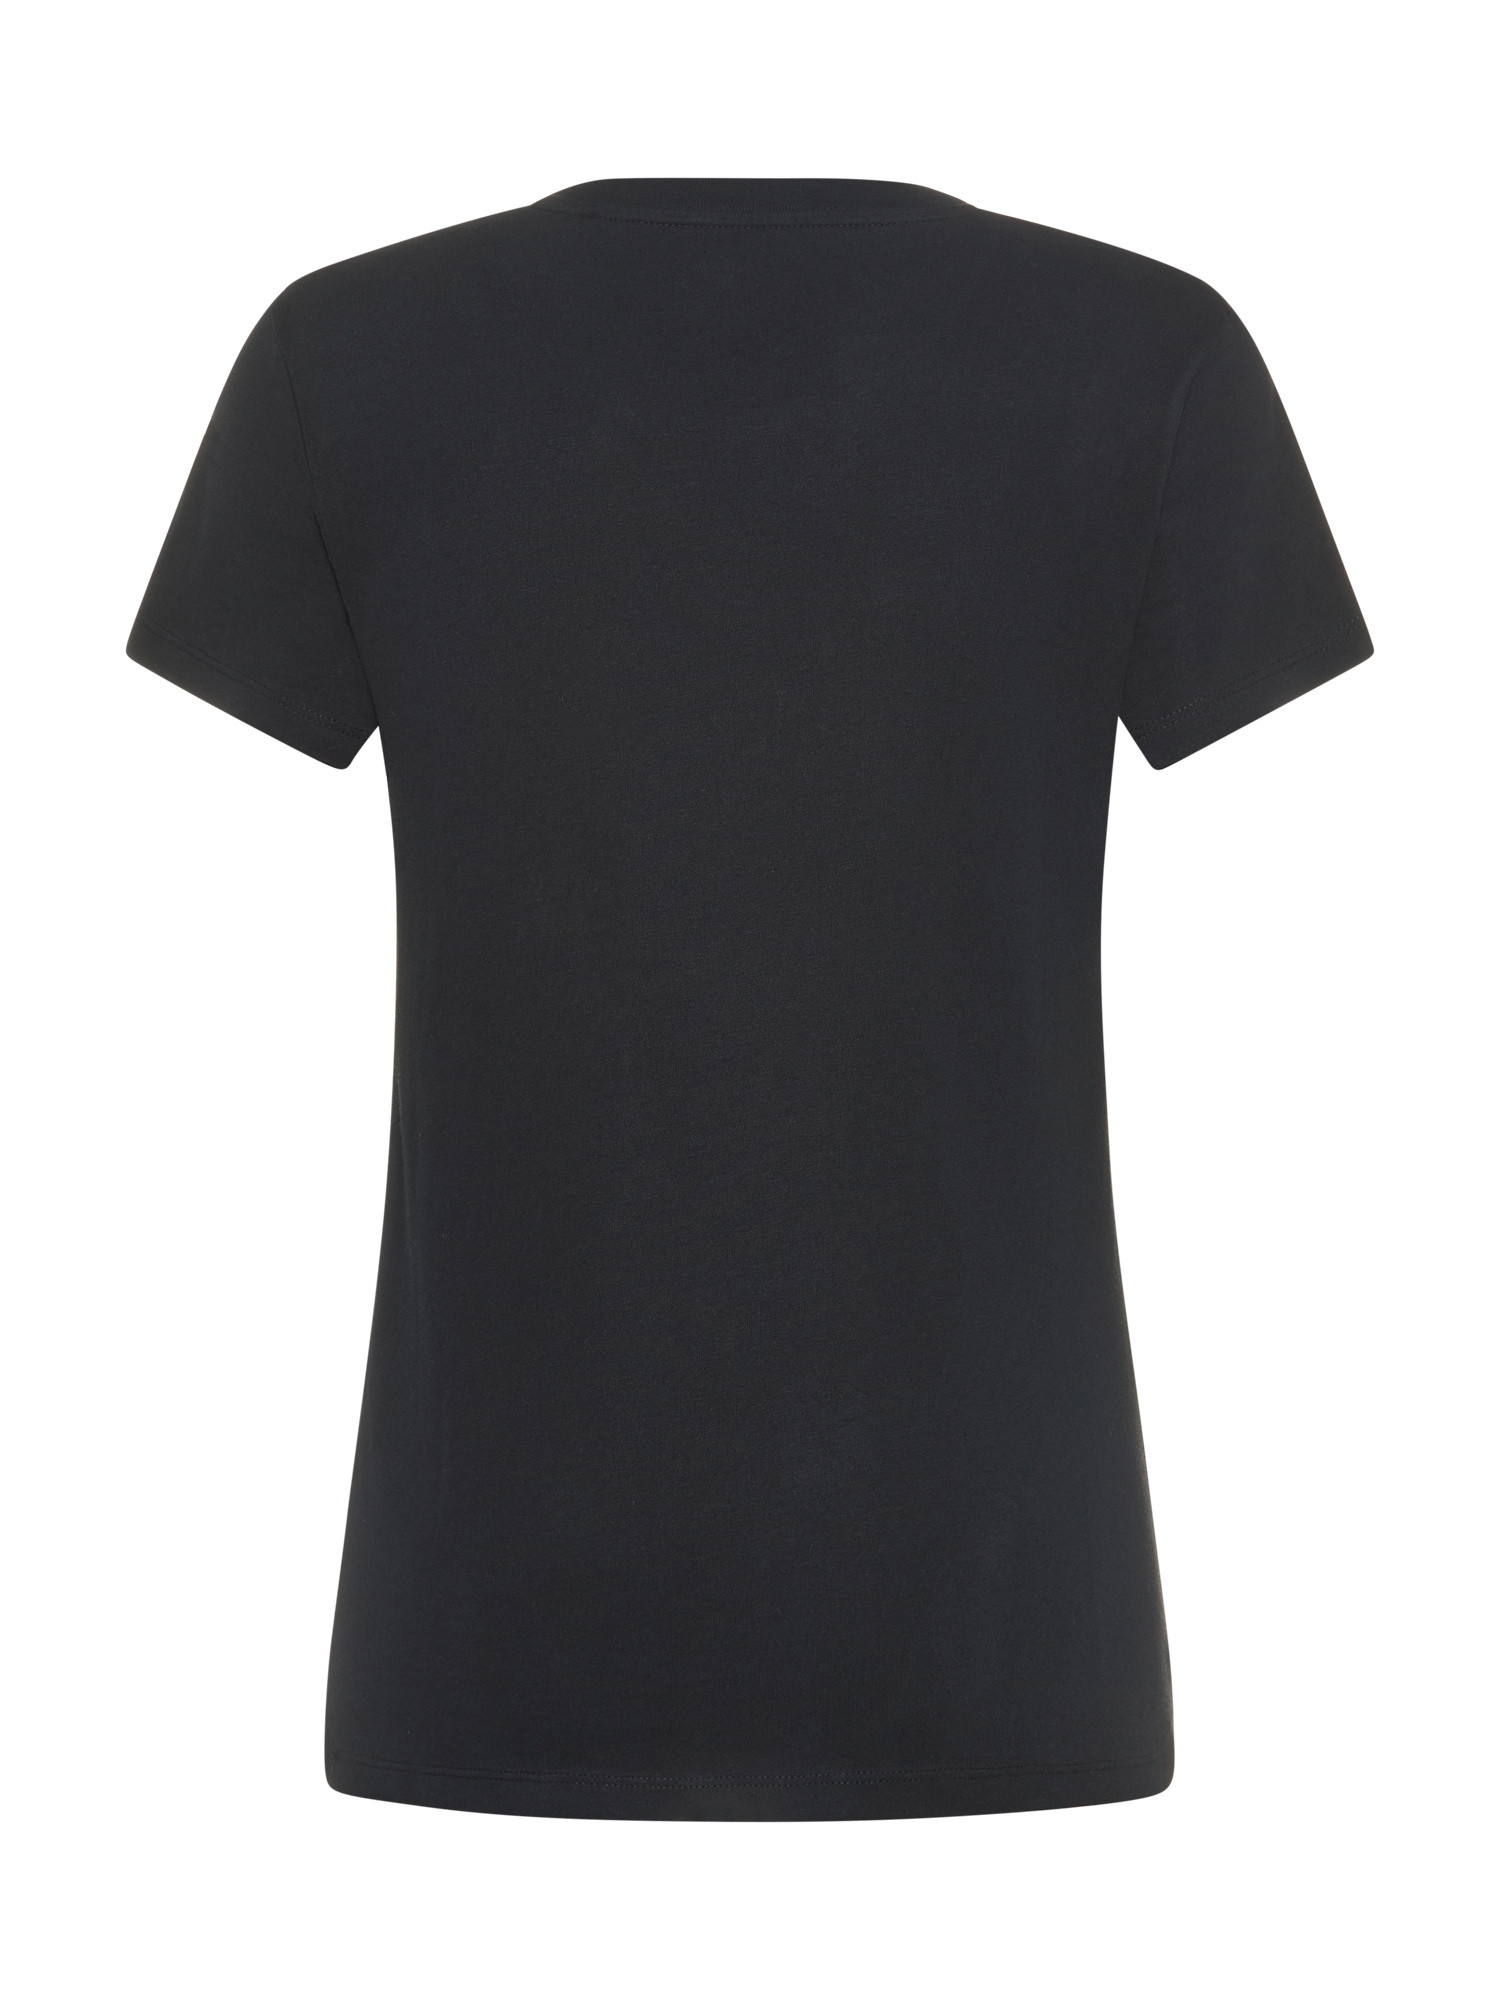 Levi's - Cotton T-shirt with logo, Black, large image number 1